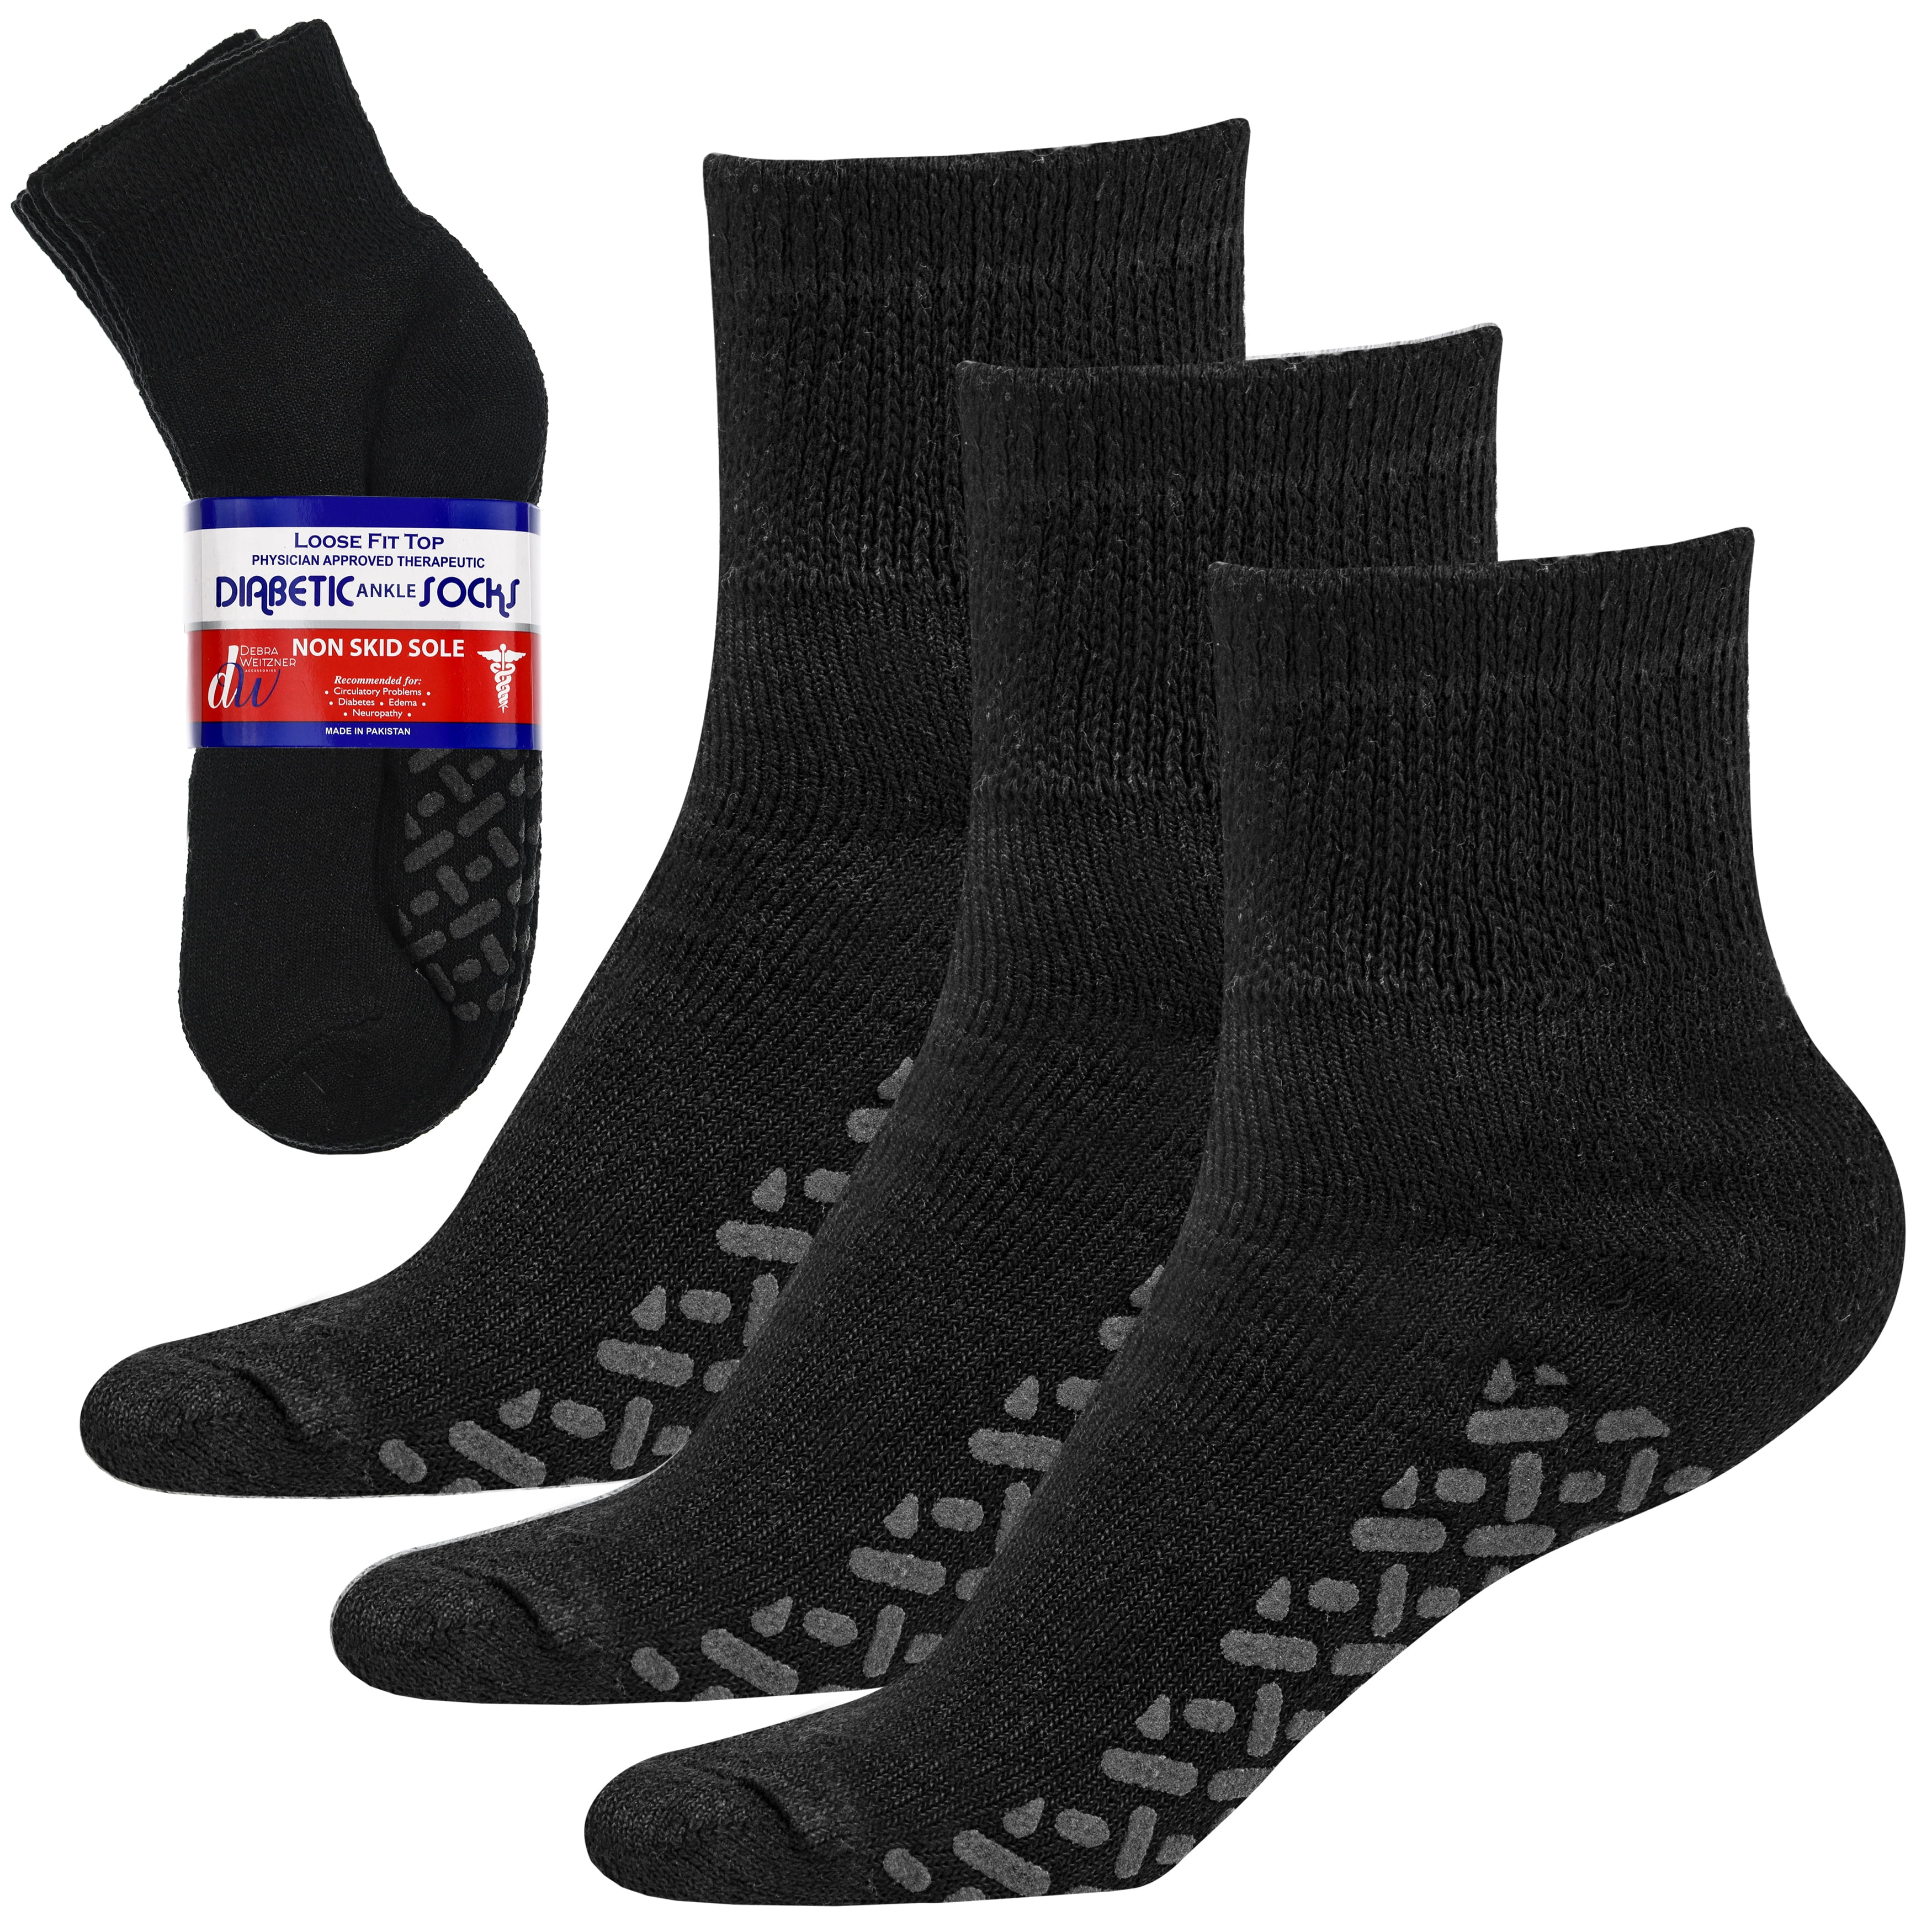 Bamboo Socks Wide Loose Top Diabetic Sock Men s7-14 Black Navy White Grey